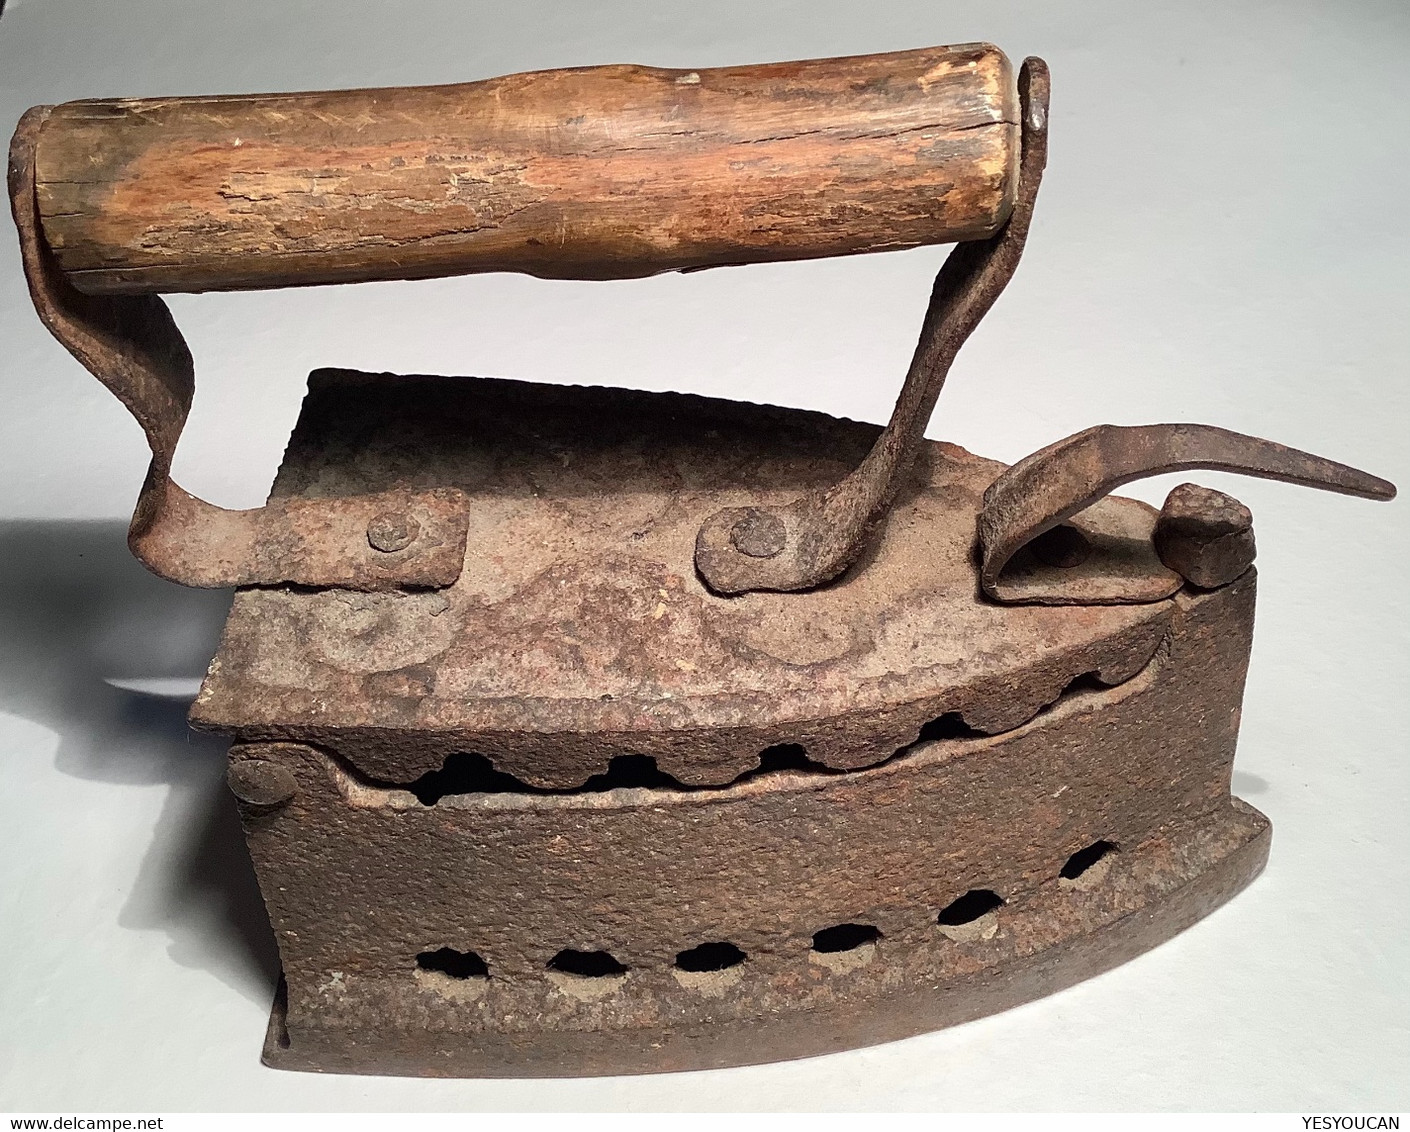 1800-1850 Ancien Fer à Repasser à Braise Bursins Vaud Suisse (Antik Bügeleisen Schweiz Antique Charcoal Iron Switzerland - Popular Art